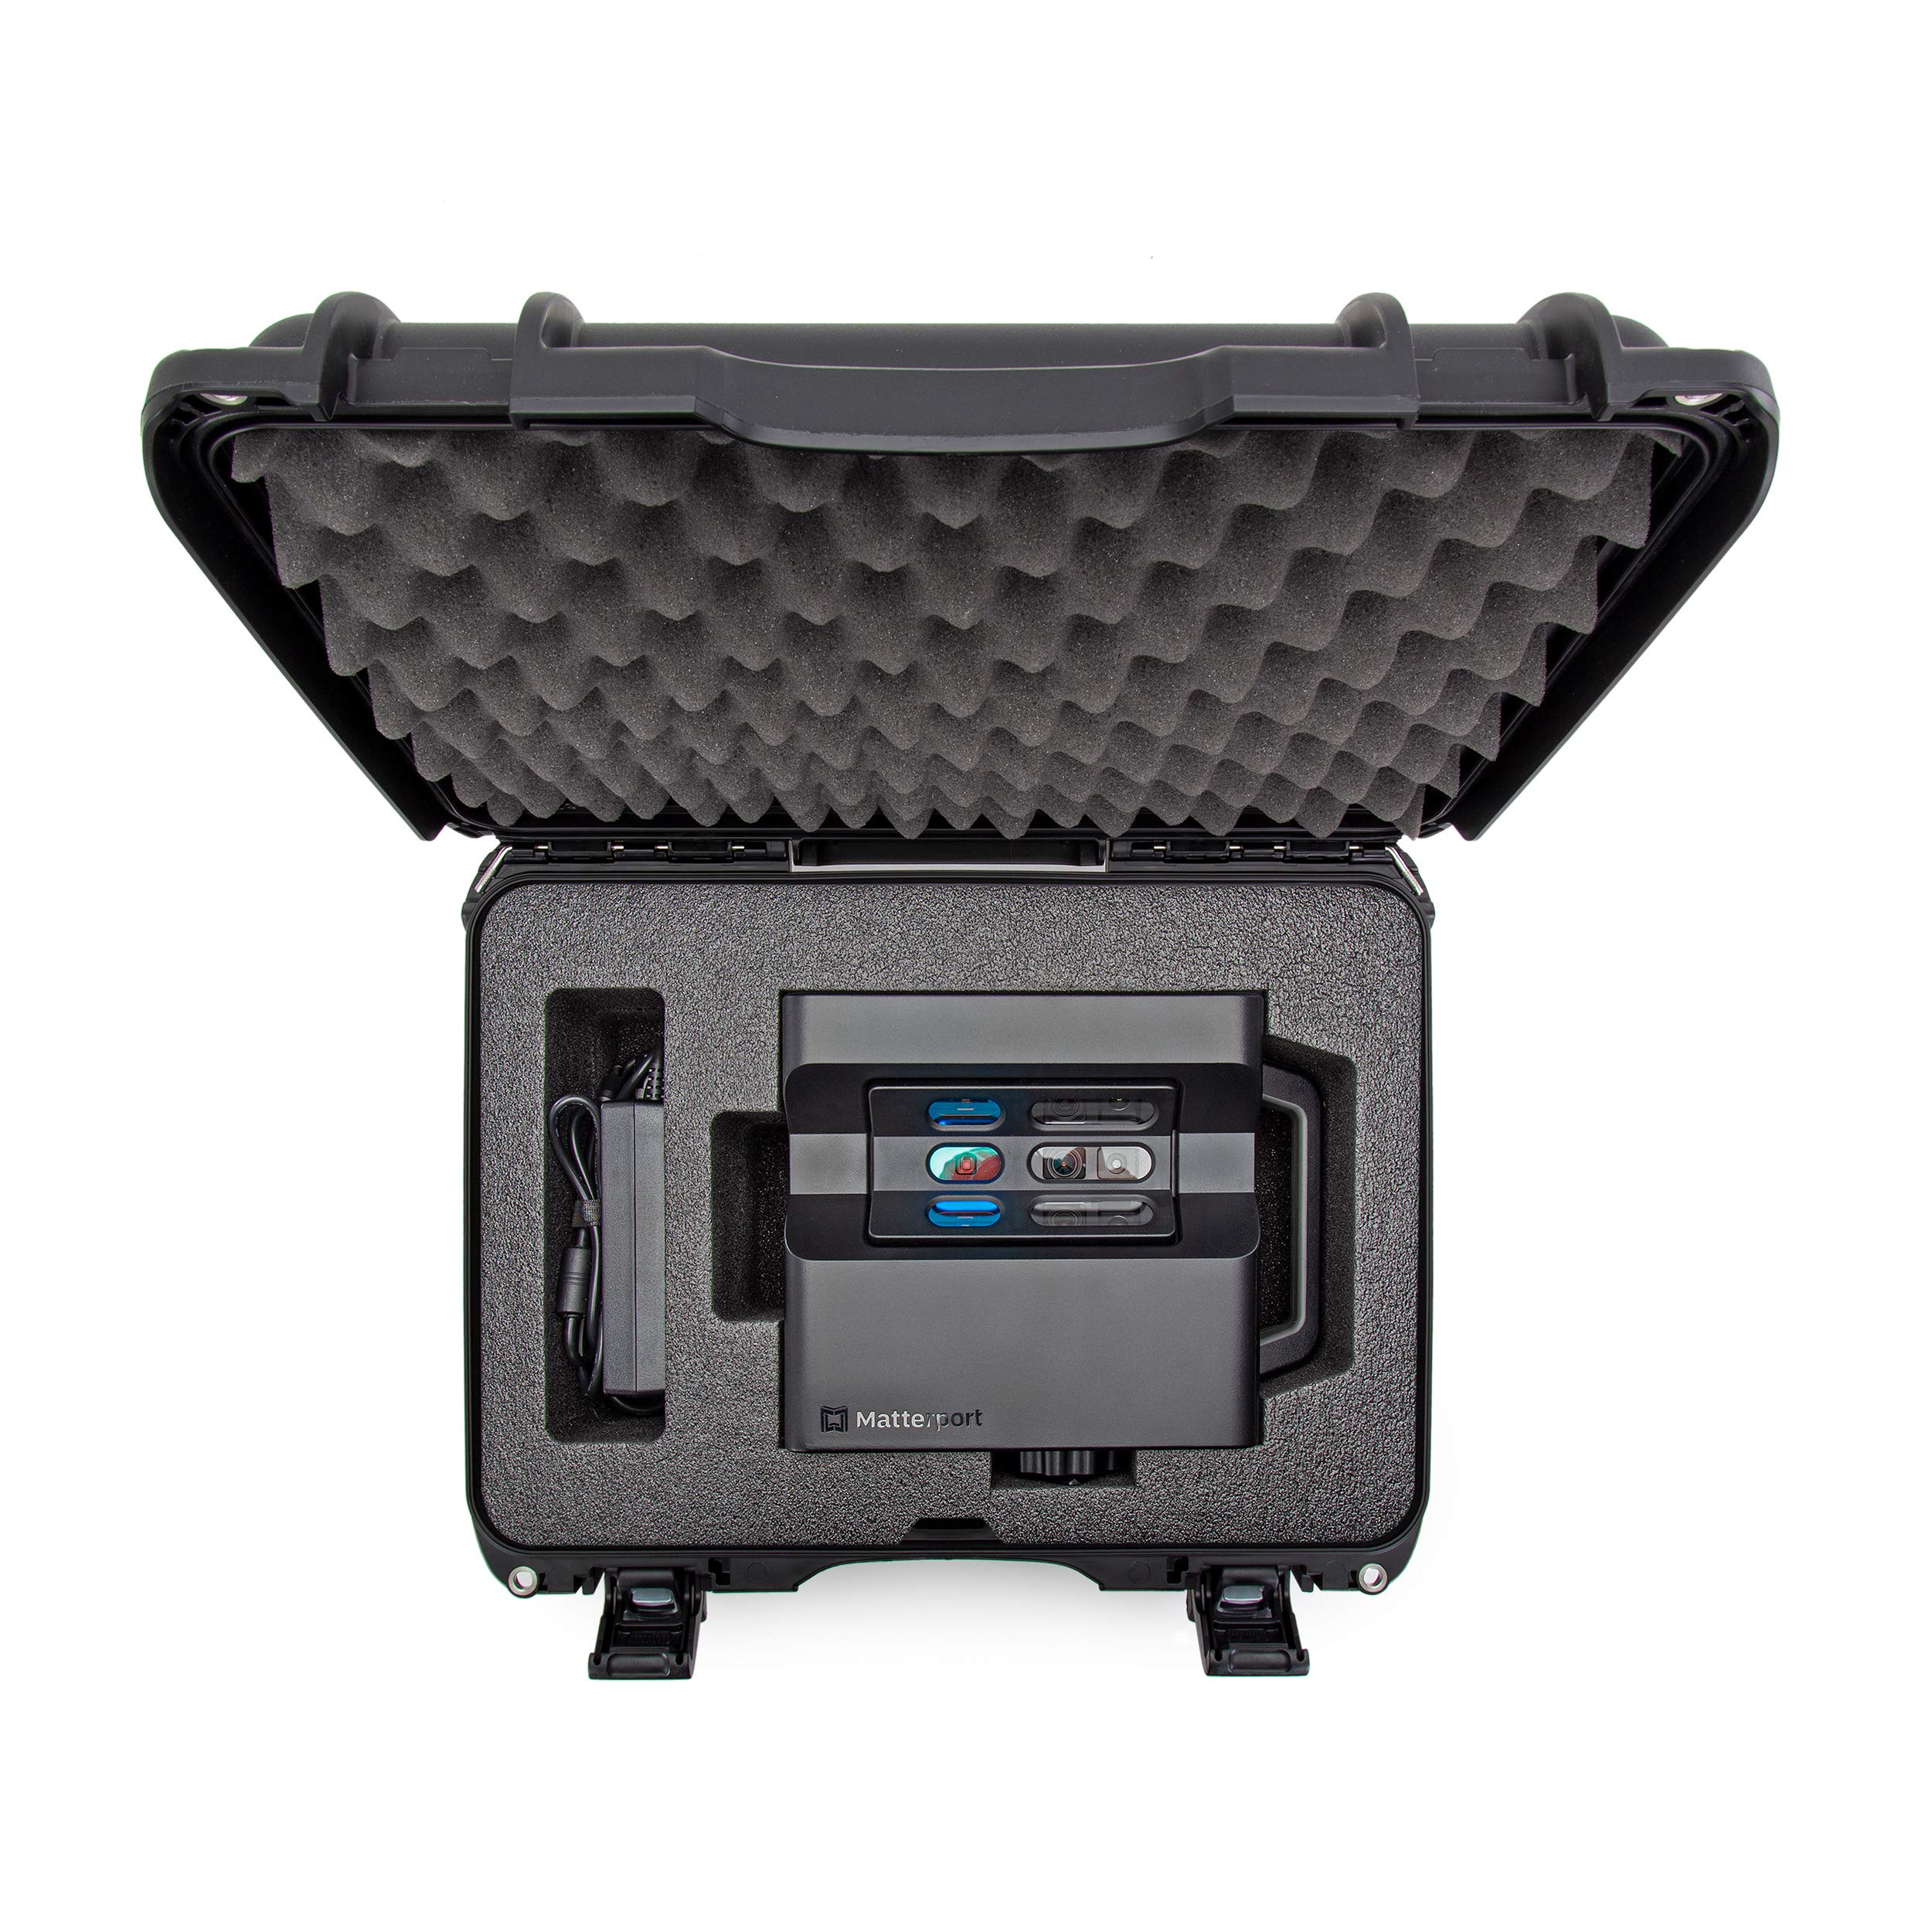 Nanuk 925 Waterproof Hard Case with Custom Foam Insert for Matterport Camera